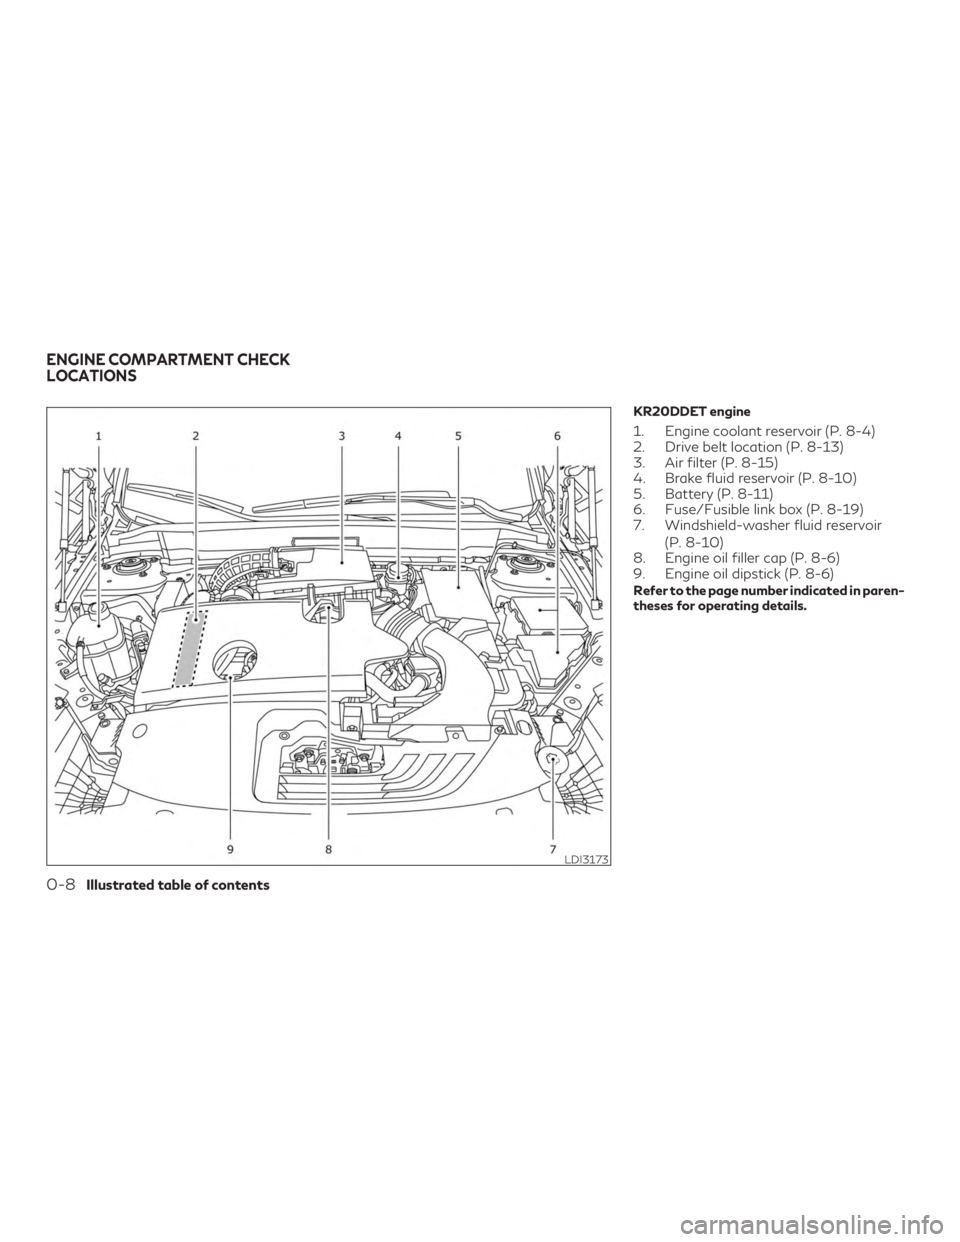 INFINITI QX50 2019 Owners Guide KR20DDET engine
1. Engine coolant reservoir (P. 8-4)
2. Drive belt location (P. 8-13)
3. Air filter (P. 8-15)
4. Brake fluid reservoir (P. 8-10)
5. Battery (P. 8-11)
6. Fuse/Fusible link box (P. 8-19)